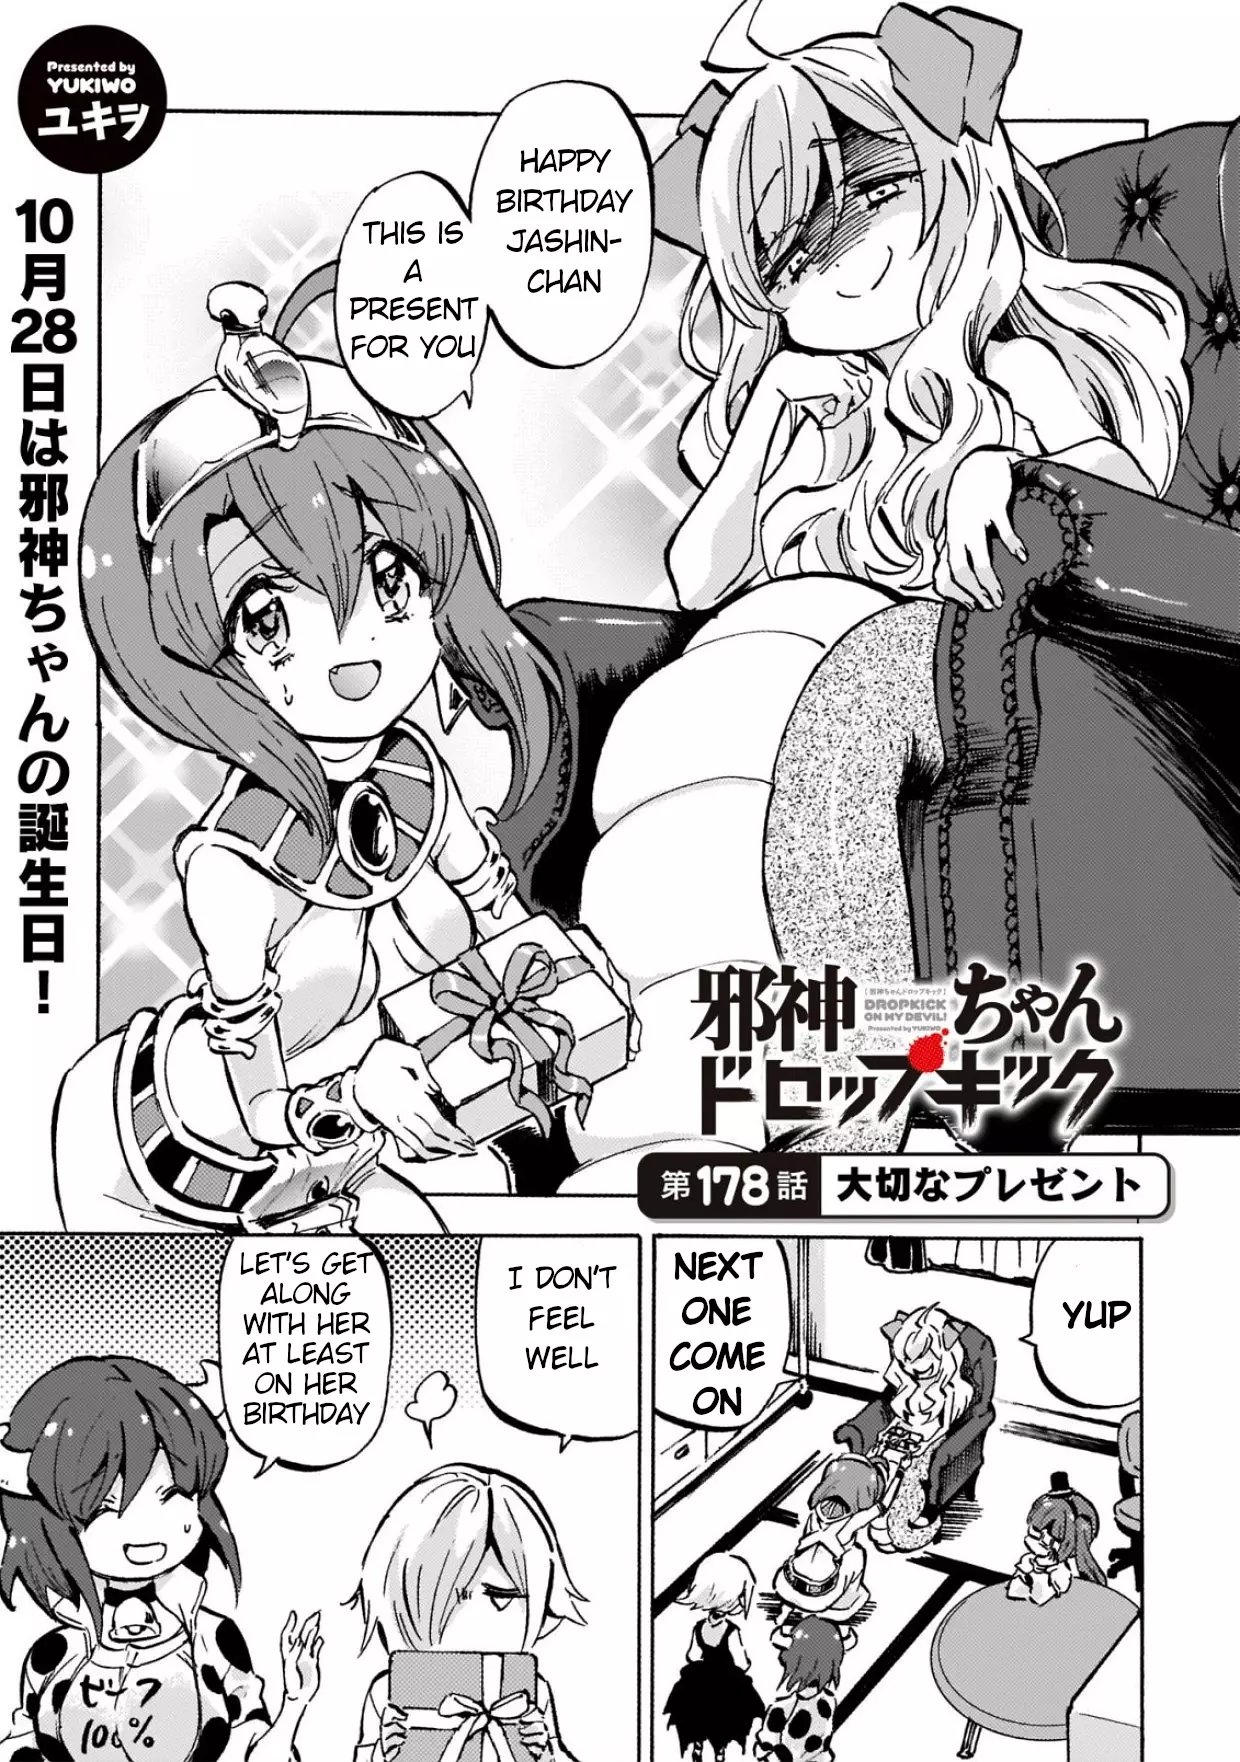 Jashin-chan Dropkick - 178 page 1